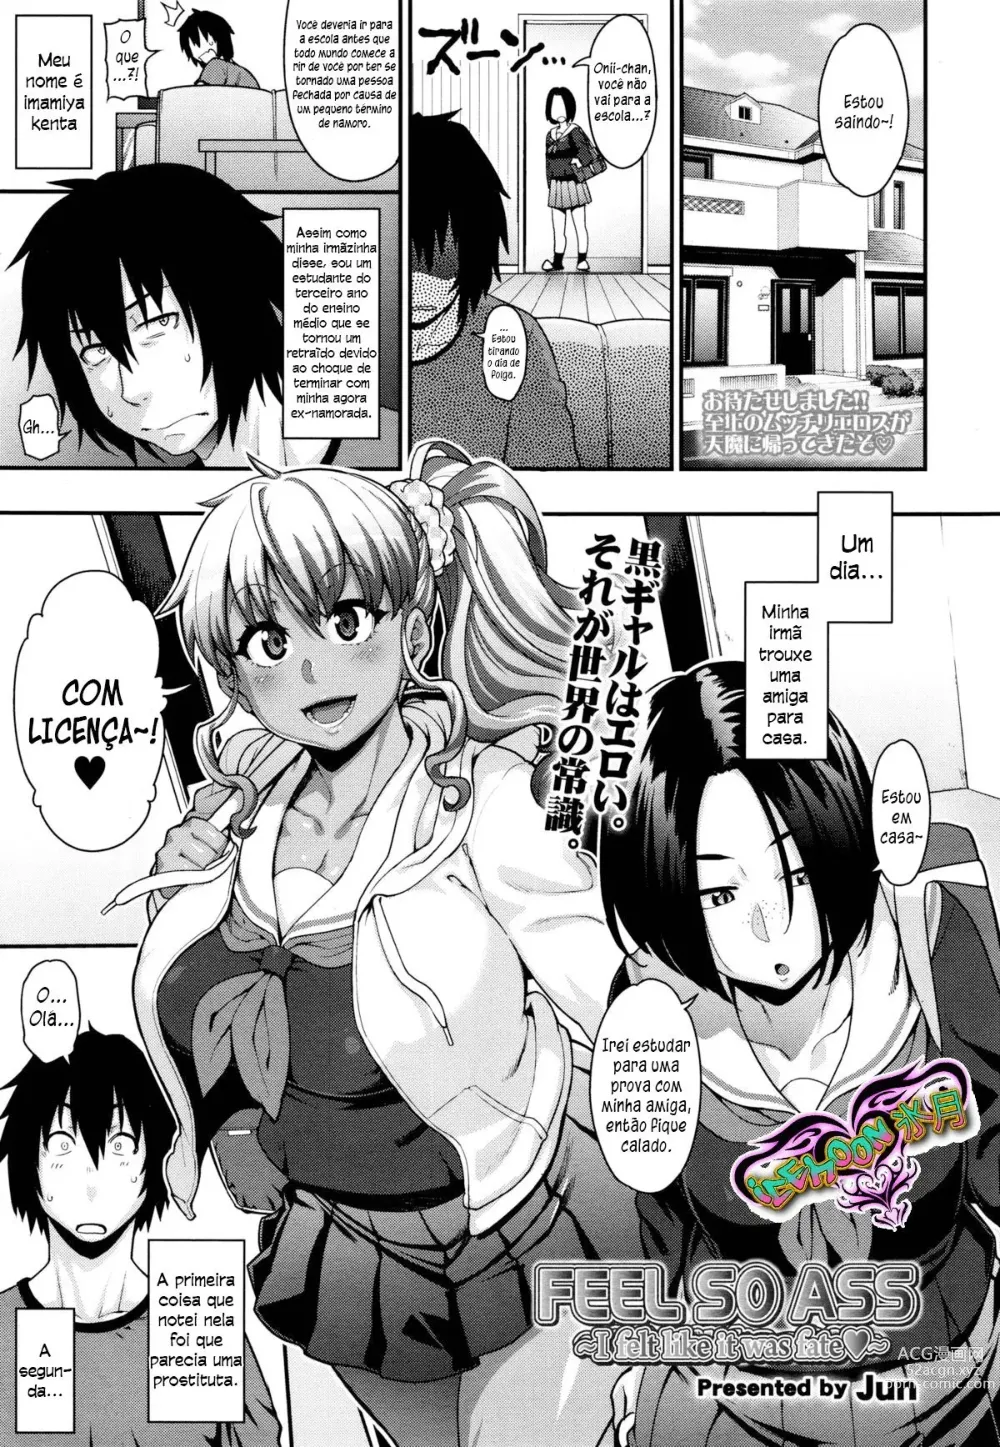 Page 1 of manga FEEL SO ASS ~Unmei, Kanjichatta~